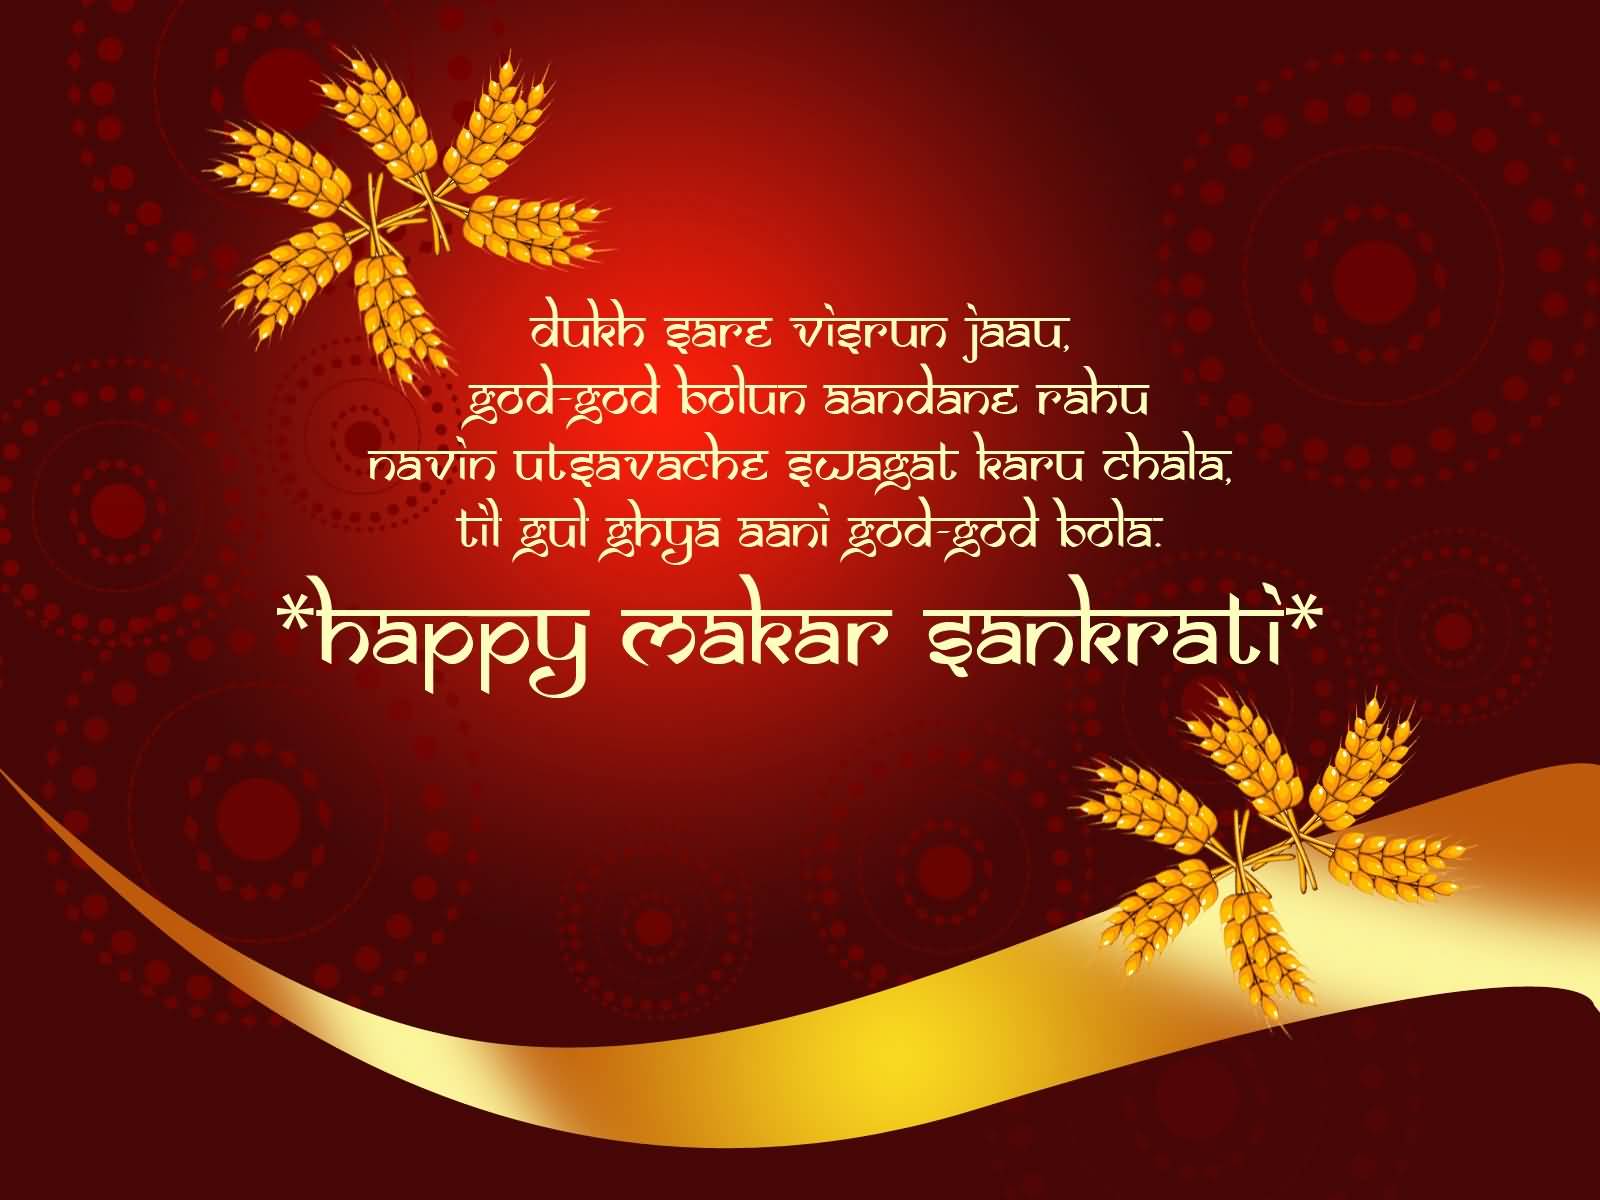 Happy Makar Sankranti Greeting Card